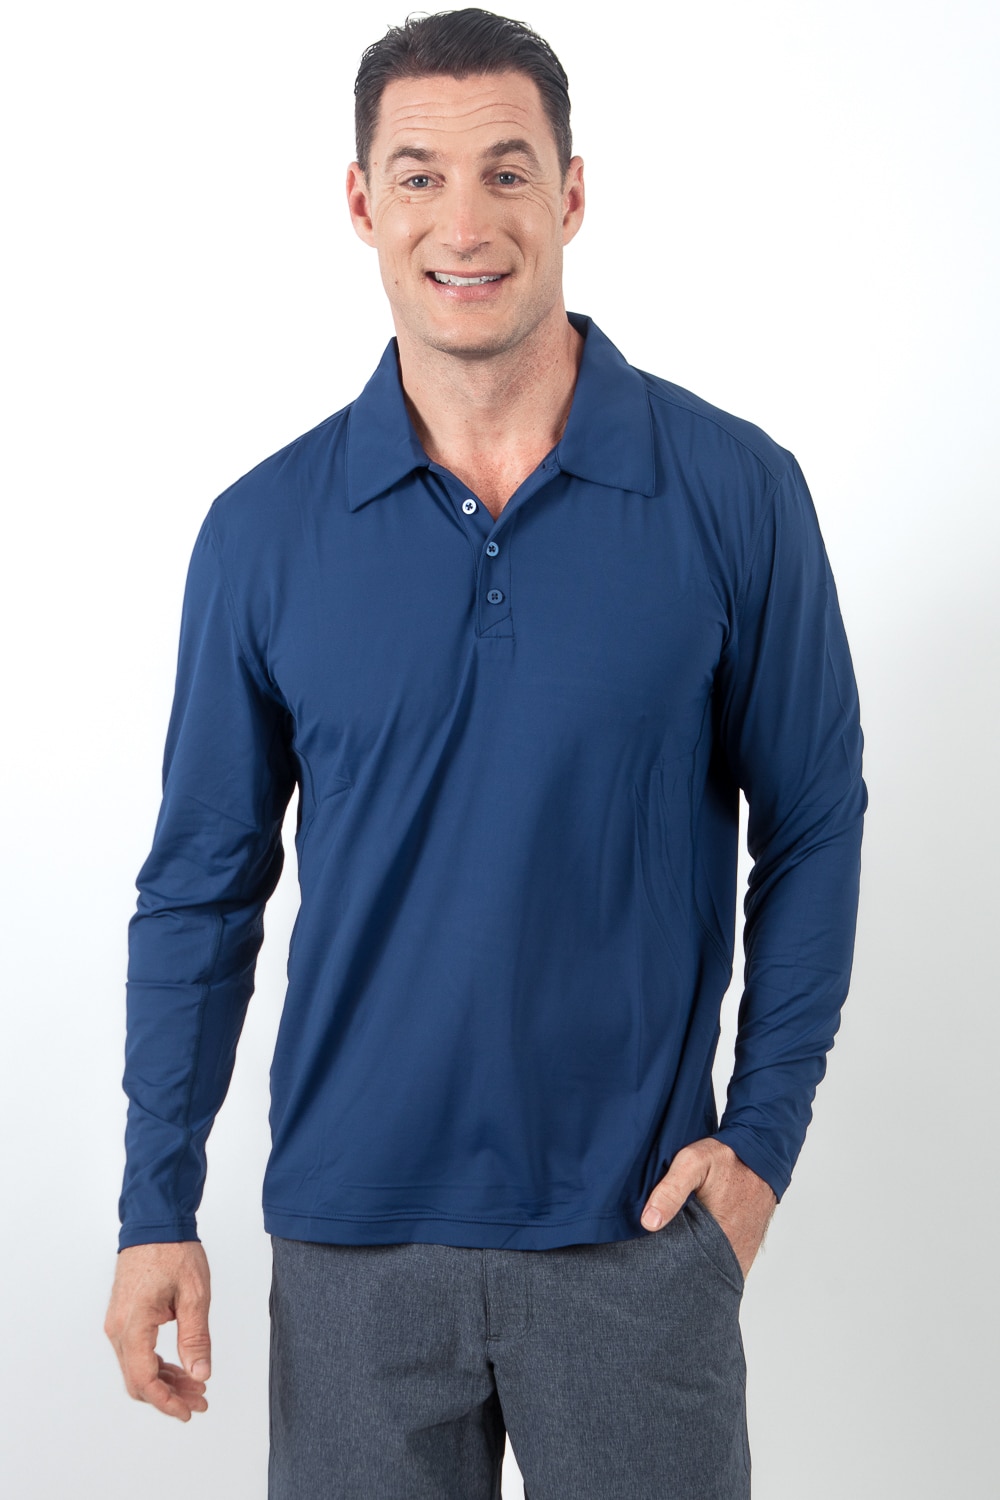 Bloq UV Long Sleeve Collared Shirt — ZEIDEL & co.